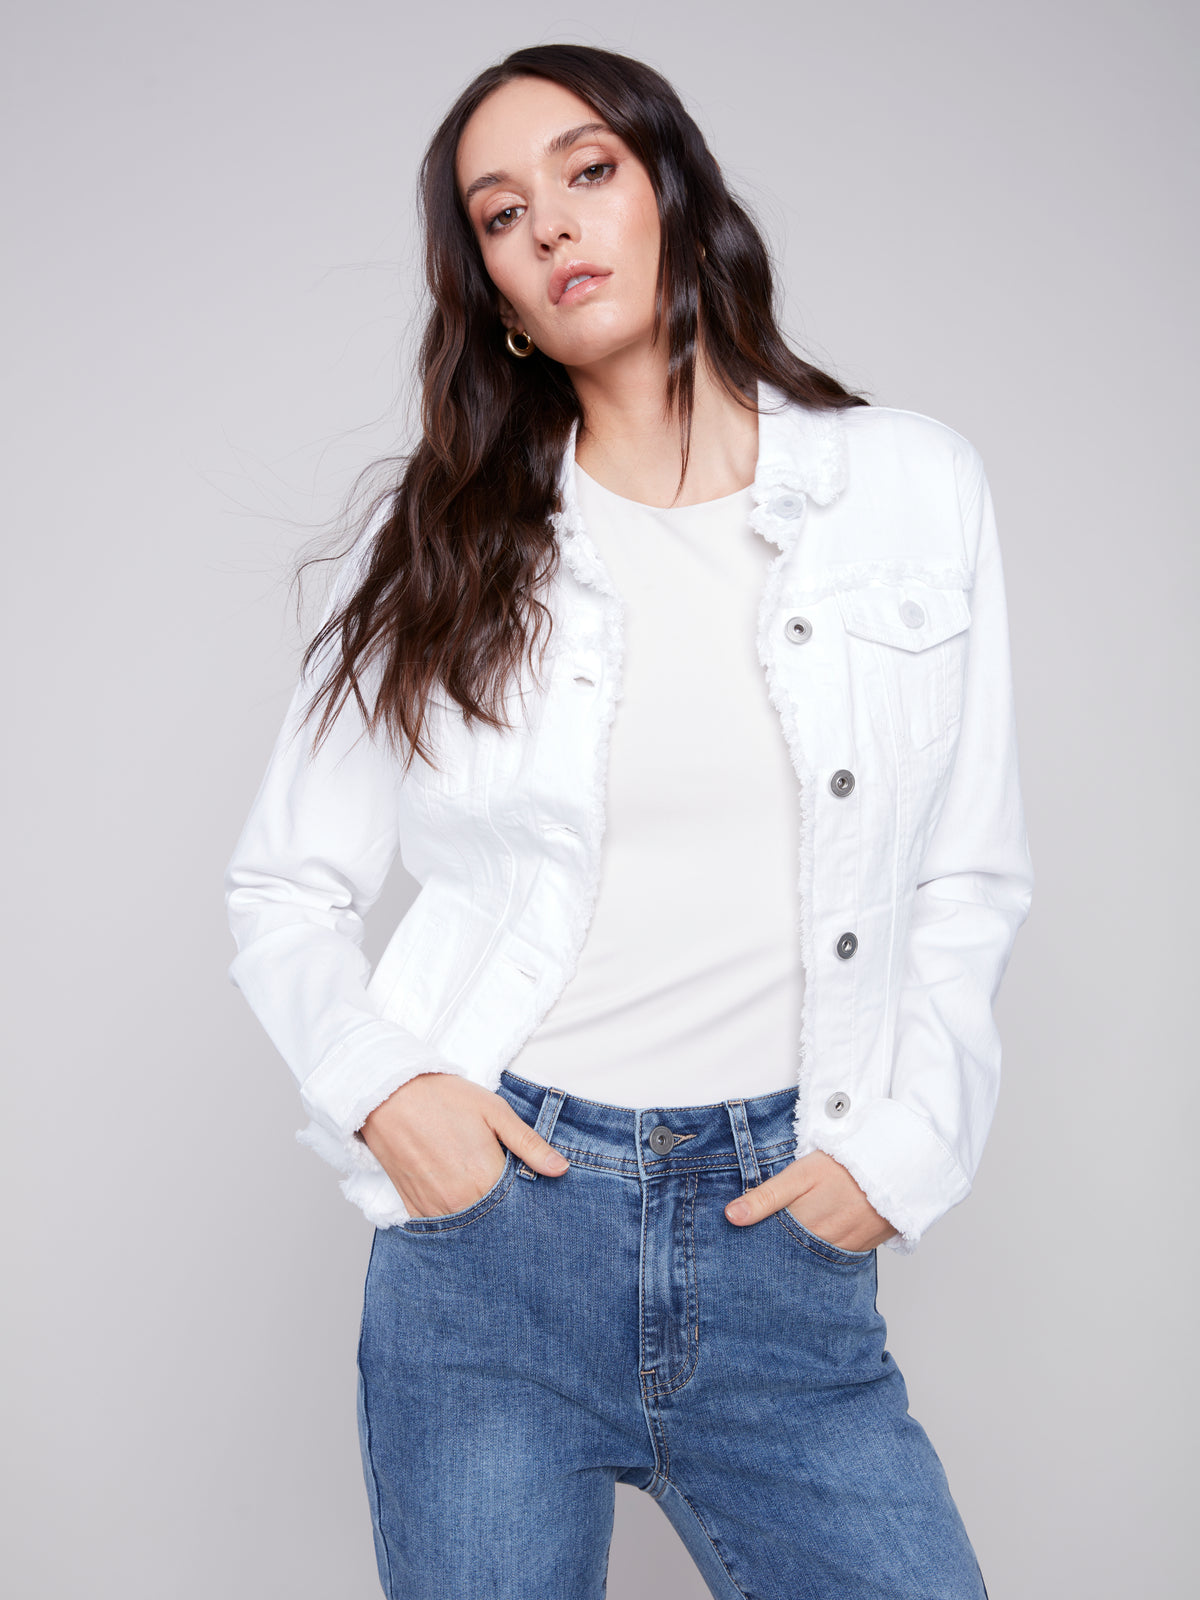 Jeans jacket Charlie B C6233-WHITE